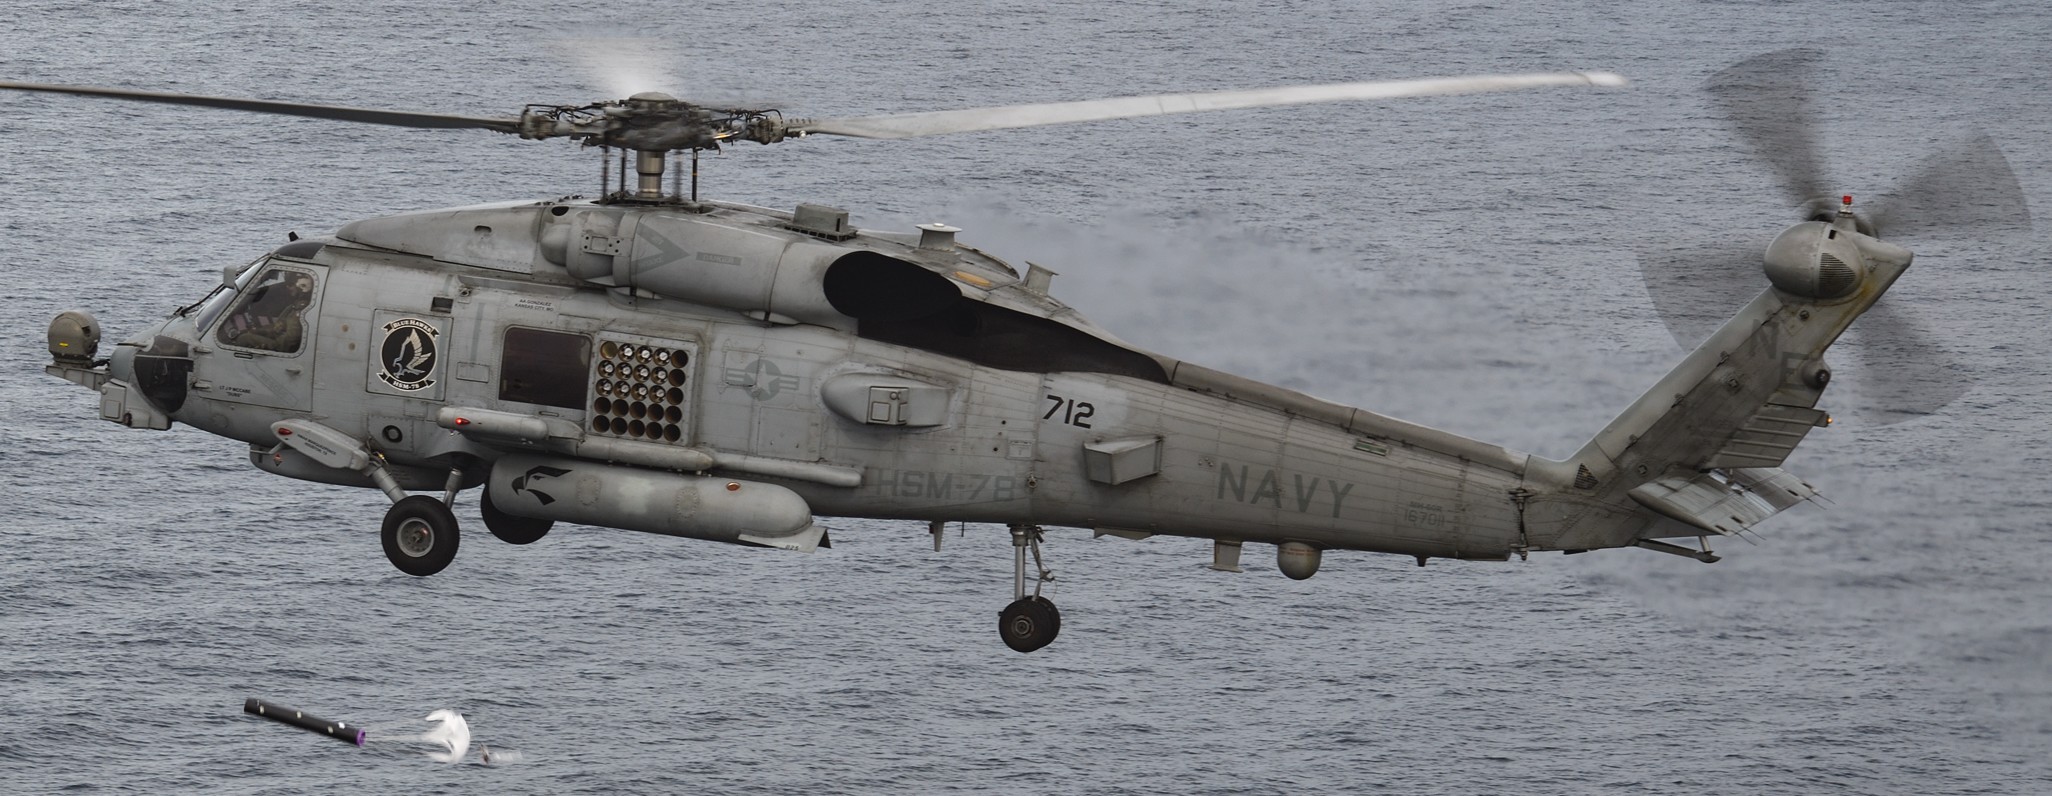 hsm-78 blue hawks helicopter maritime strike squadron mh-60r seahawk us navy 2017 55 sonar buoy uss carl vinson cvn-70